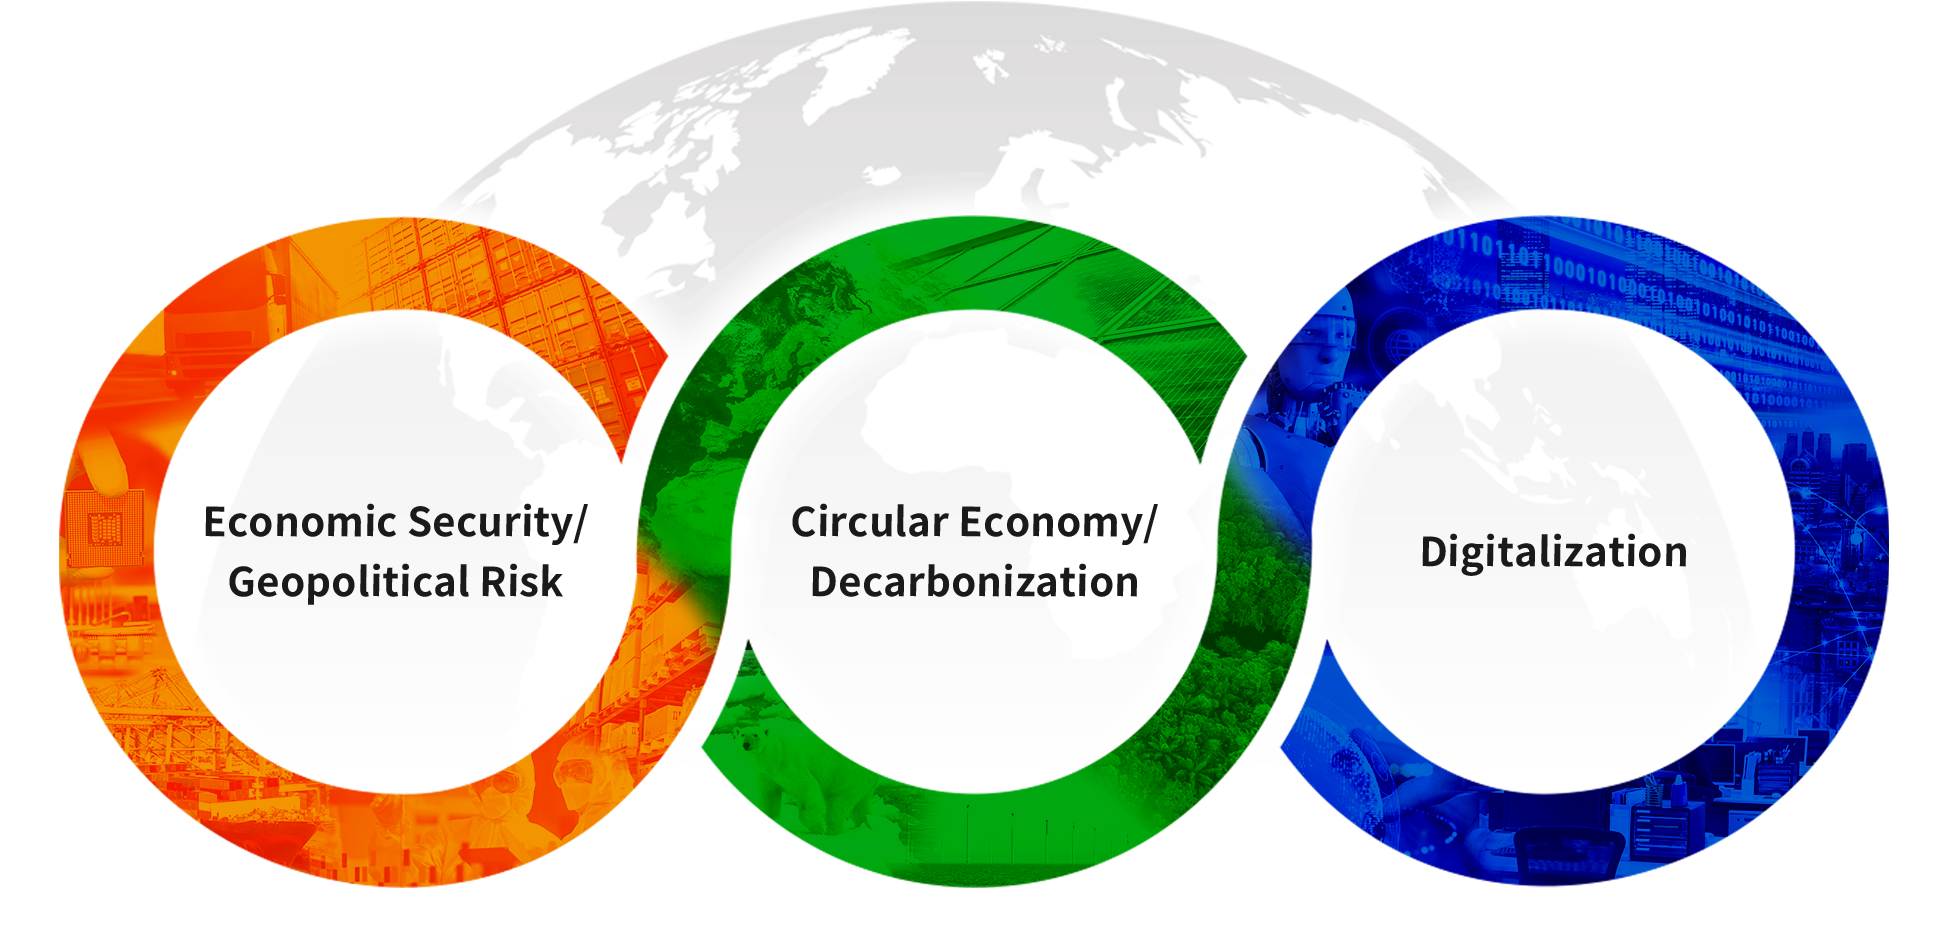 Economic Security/Geopolitical Risk, Circular Economy /Decarbonization, Digitalization